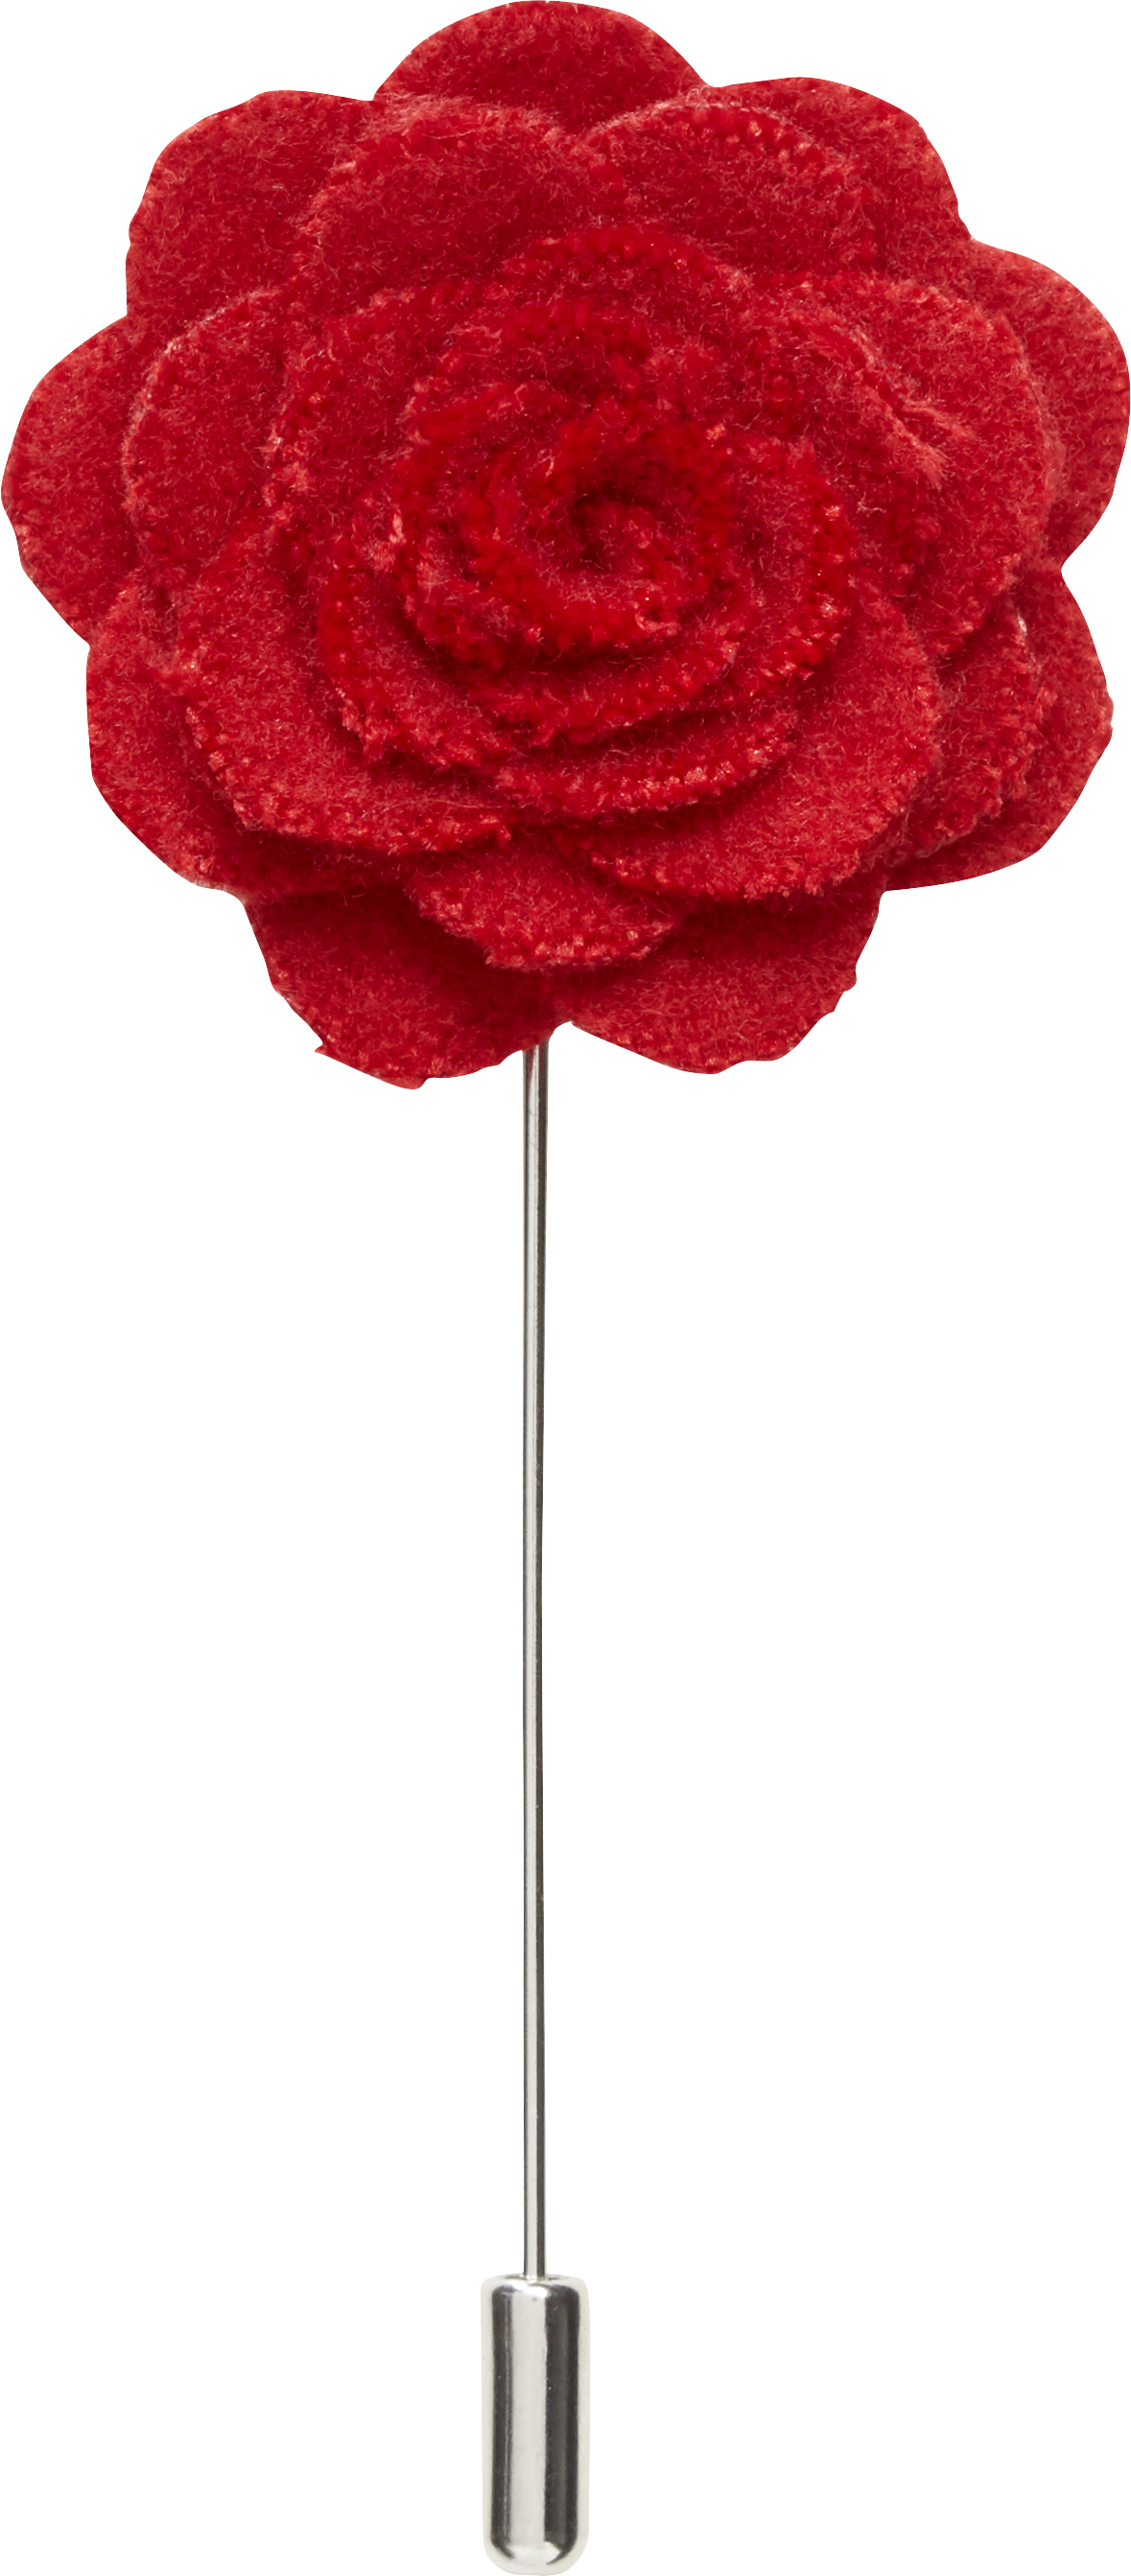 Esquire Red Rose Floral Lapel Pin - Men's Accessories | Men's Wearhouse